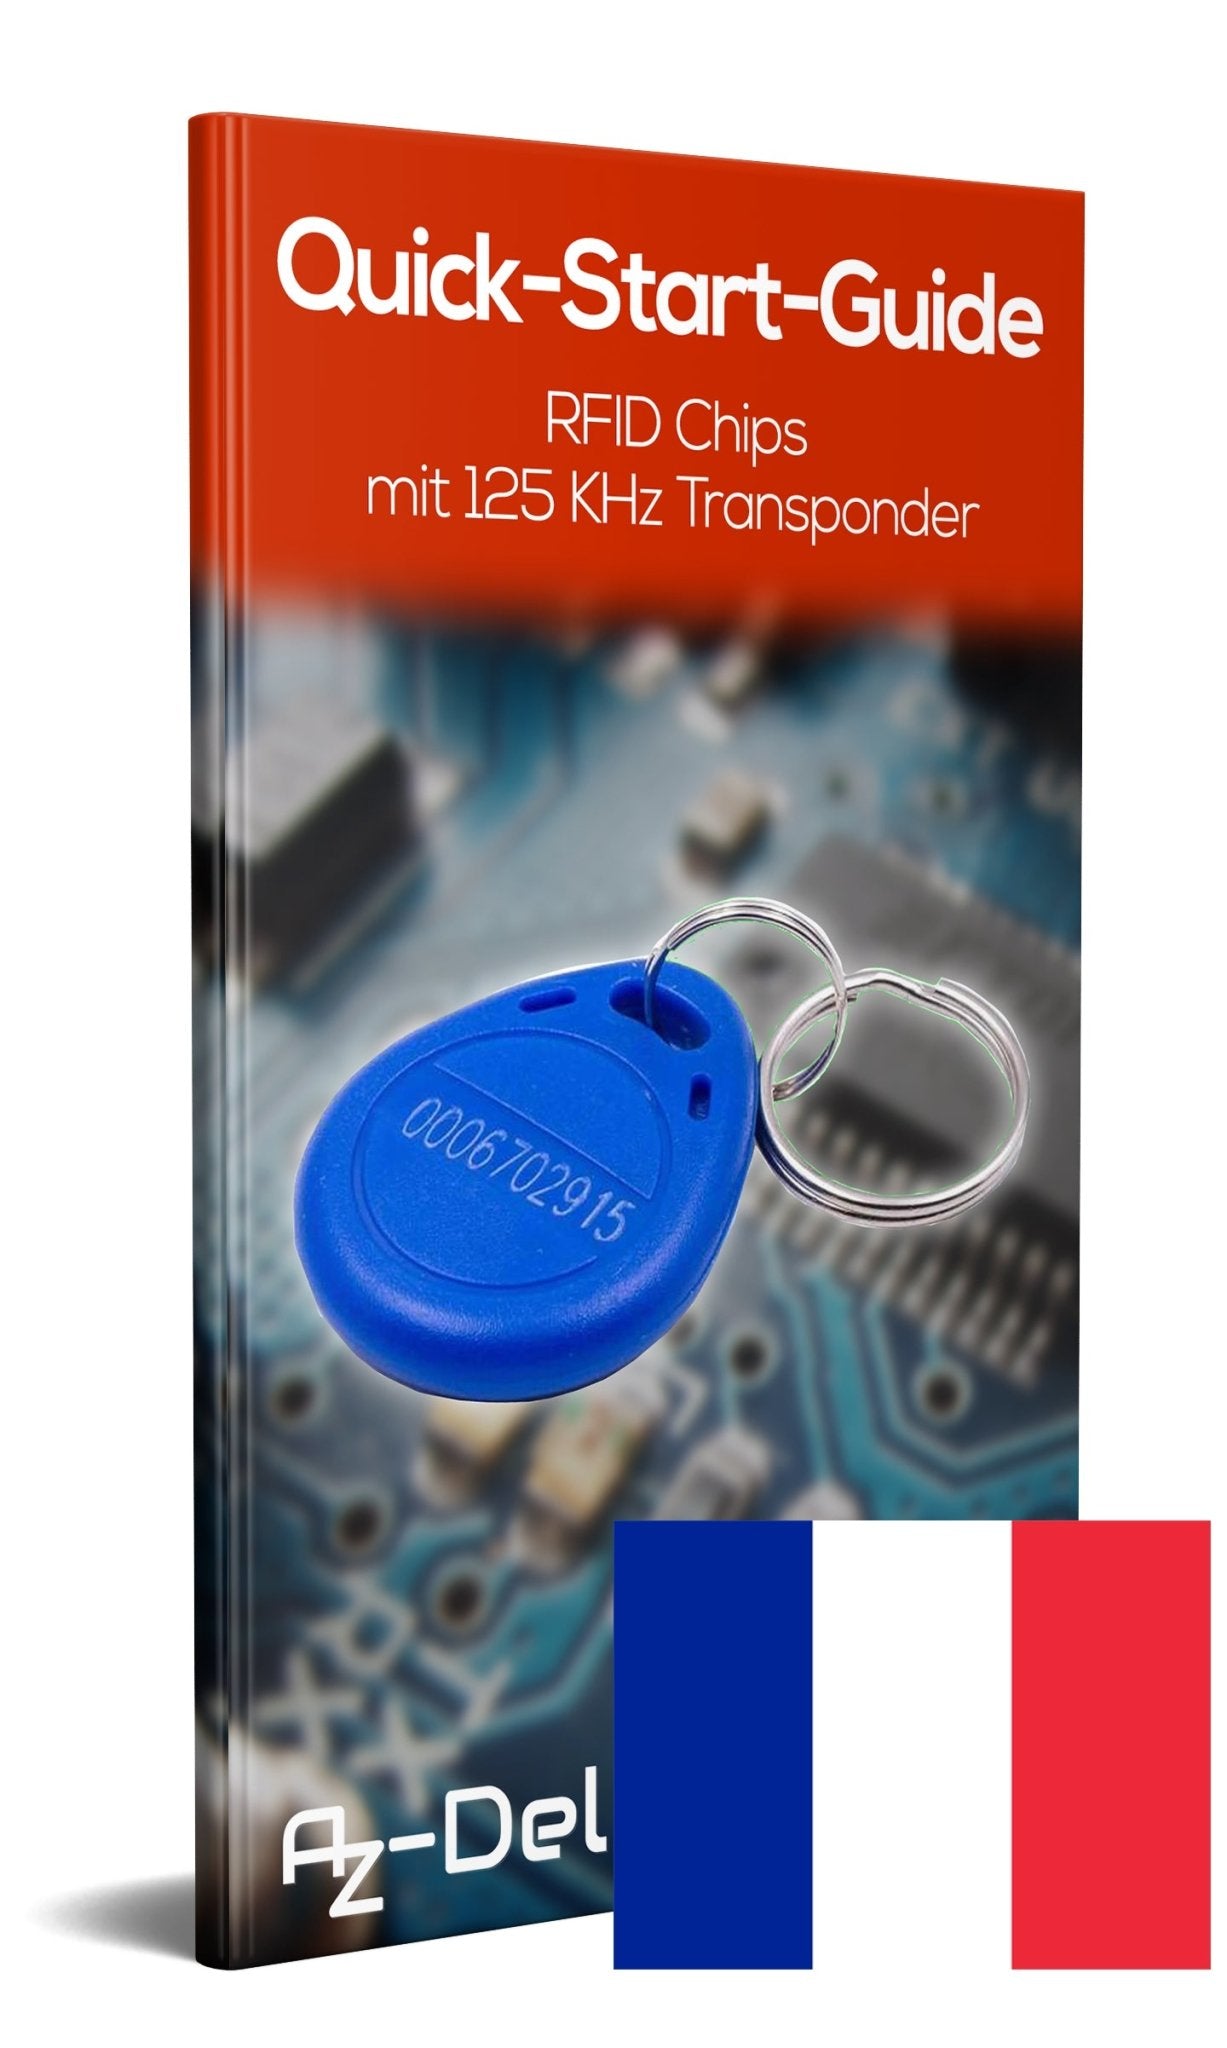 RFID Chips mit 125 KHz Transponder - AZ-Delivery